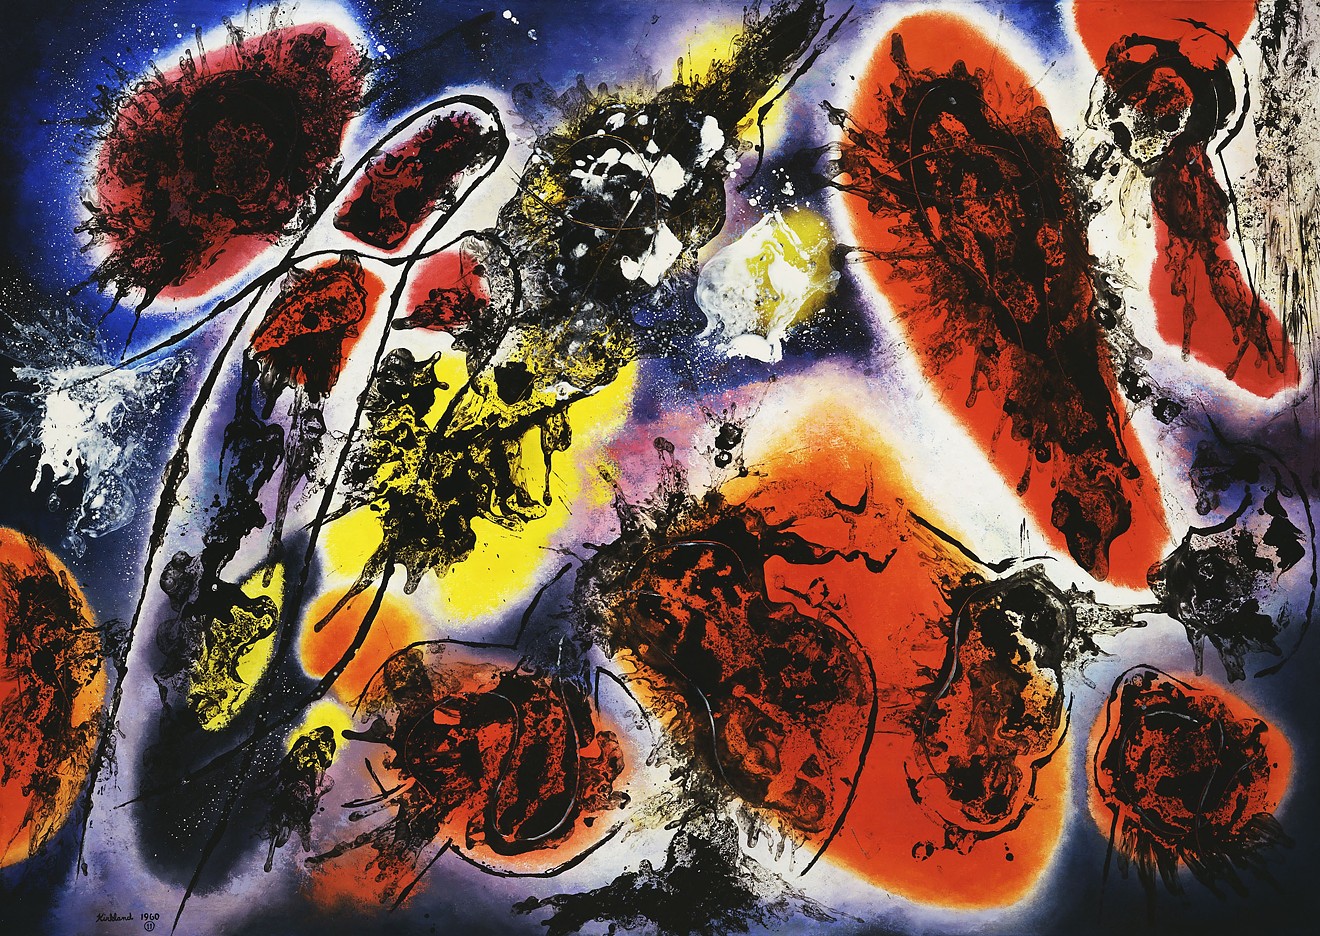 Vance Kirkland (1904-1981, American), “Creation of Space,” 1960, by Vance Kirkland (1904-1981, American), oil paint and water on linen.